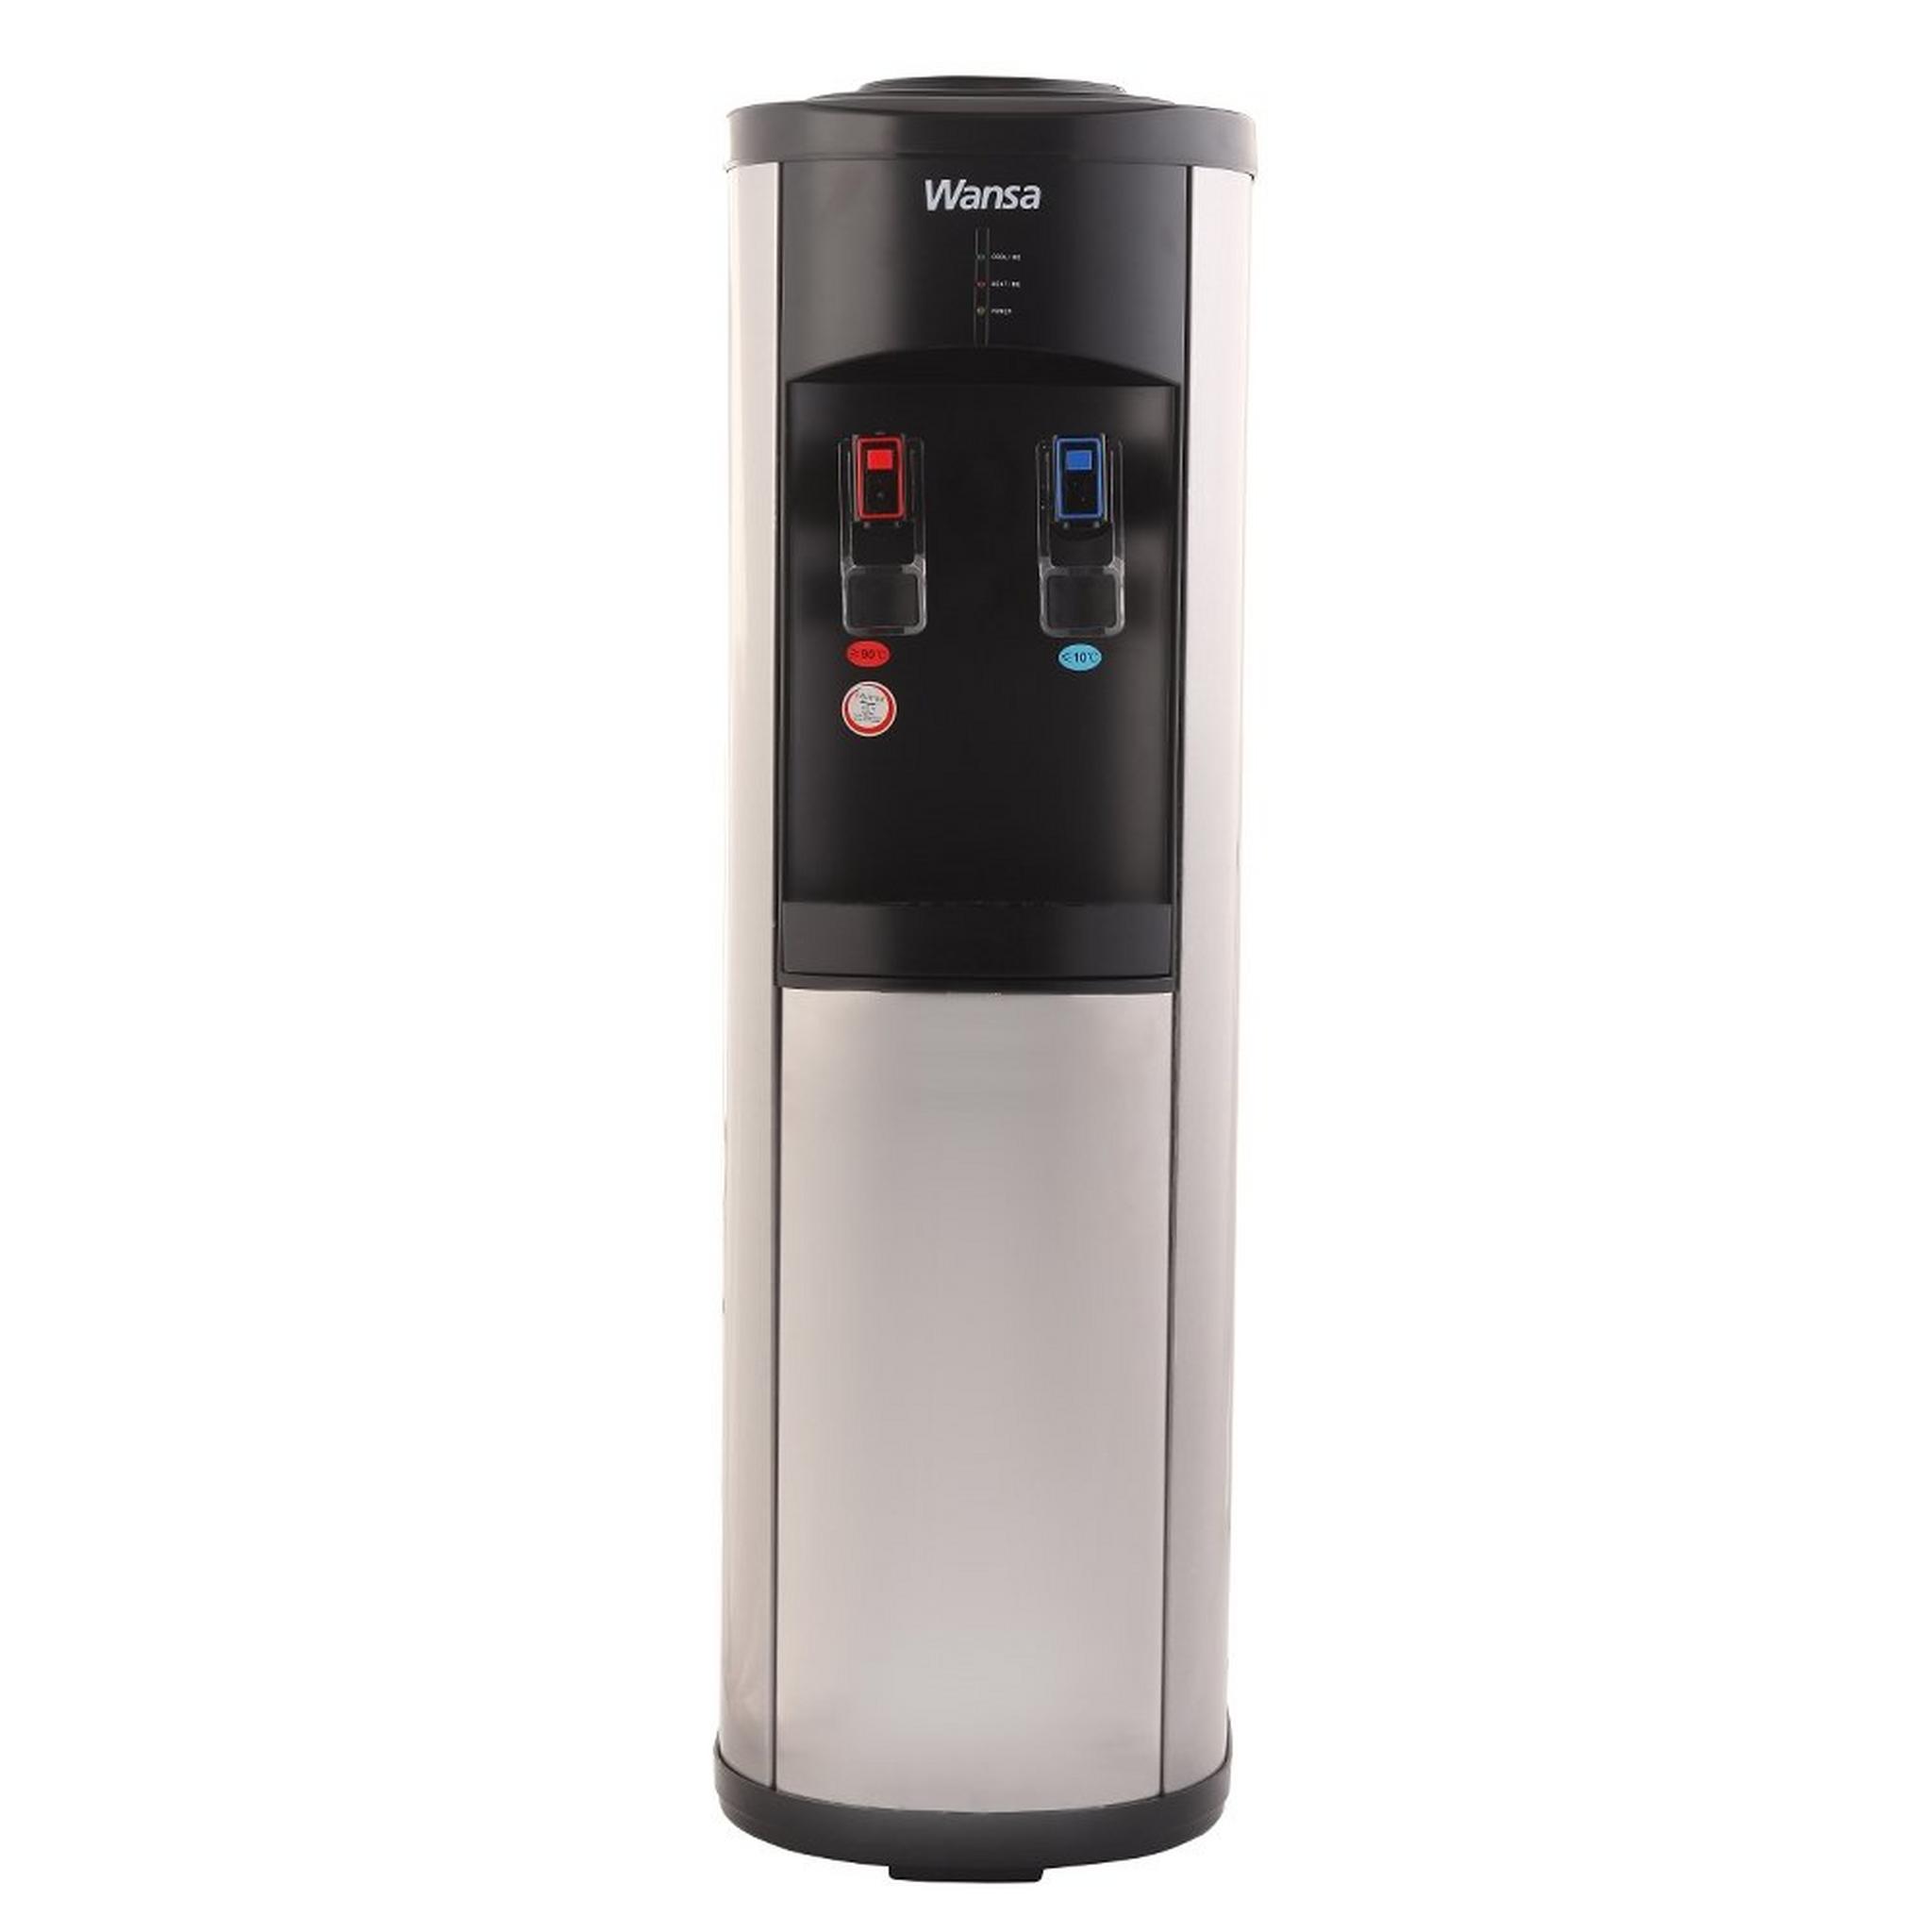 Wansa Water Dispenser (WWD2FSSBC1) - Black/Silver